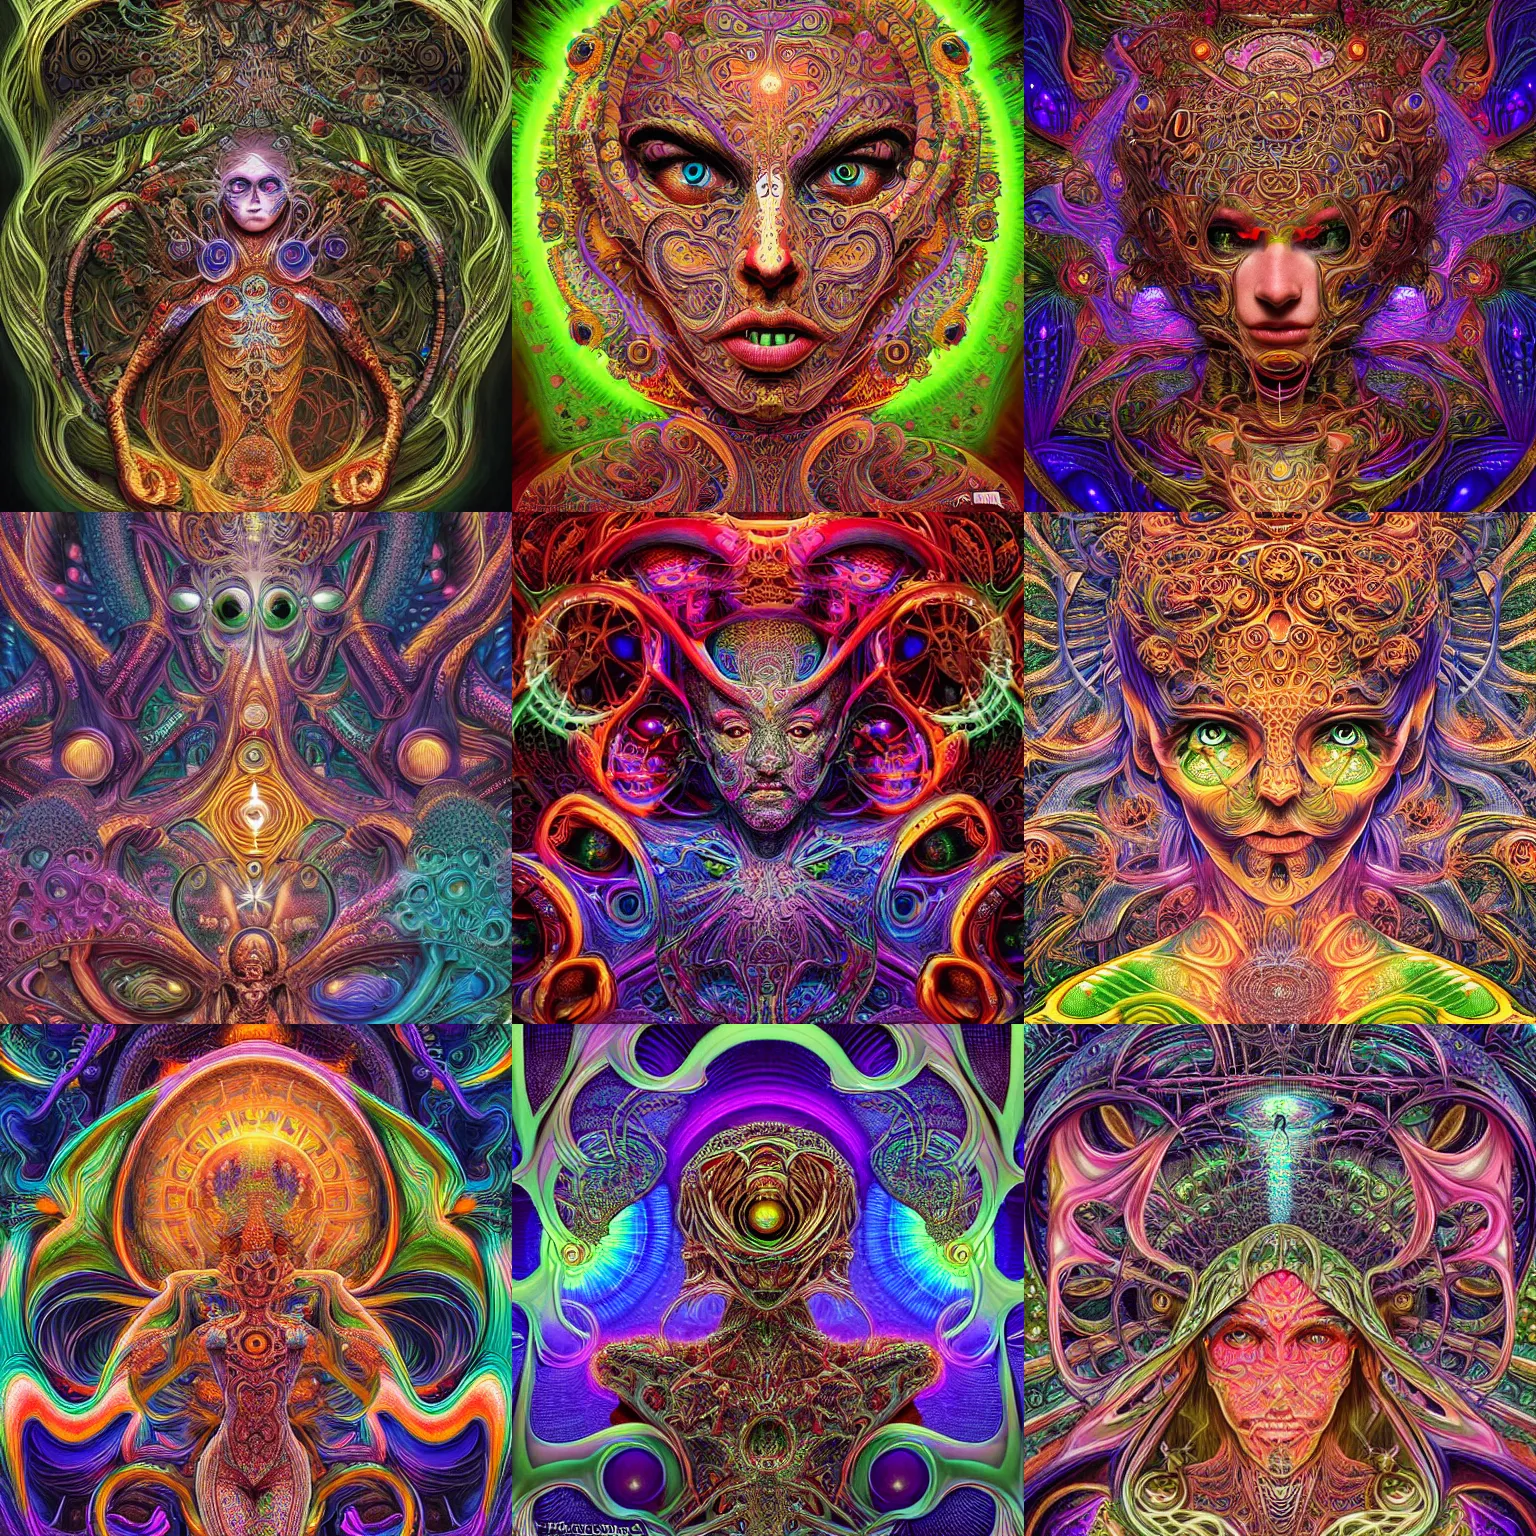 Prompt: a intricate ornate psychedelic image of a machine elf, digital art by felix kelly, alex grey, dan mumford, artgerm, biolumenescence, psychedelic art, psychedelic, fractalism, fractals, sacred geometry, artstation, detailed, art, hyper realism, hyper detailed, cgsociety, ue 5, hd, 3 d